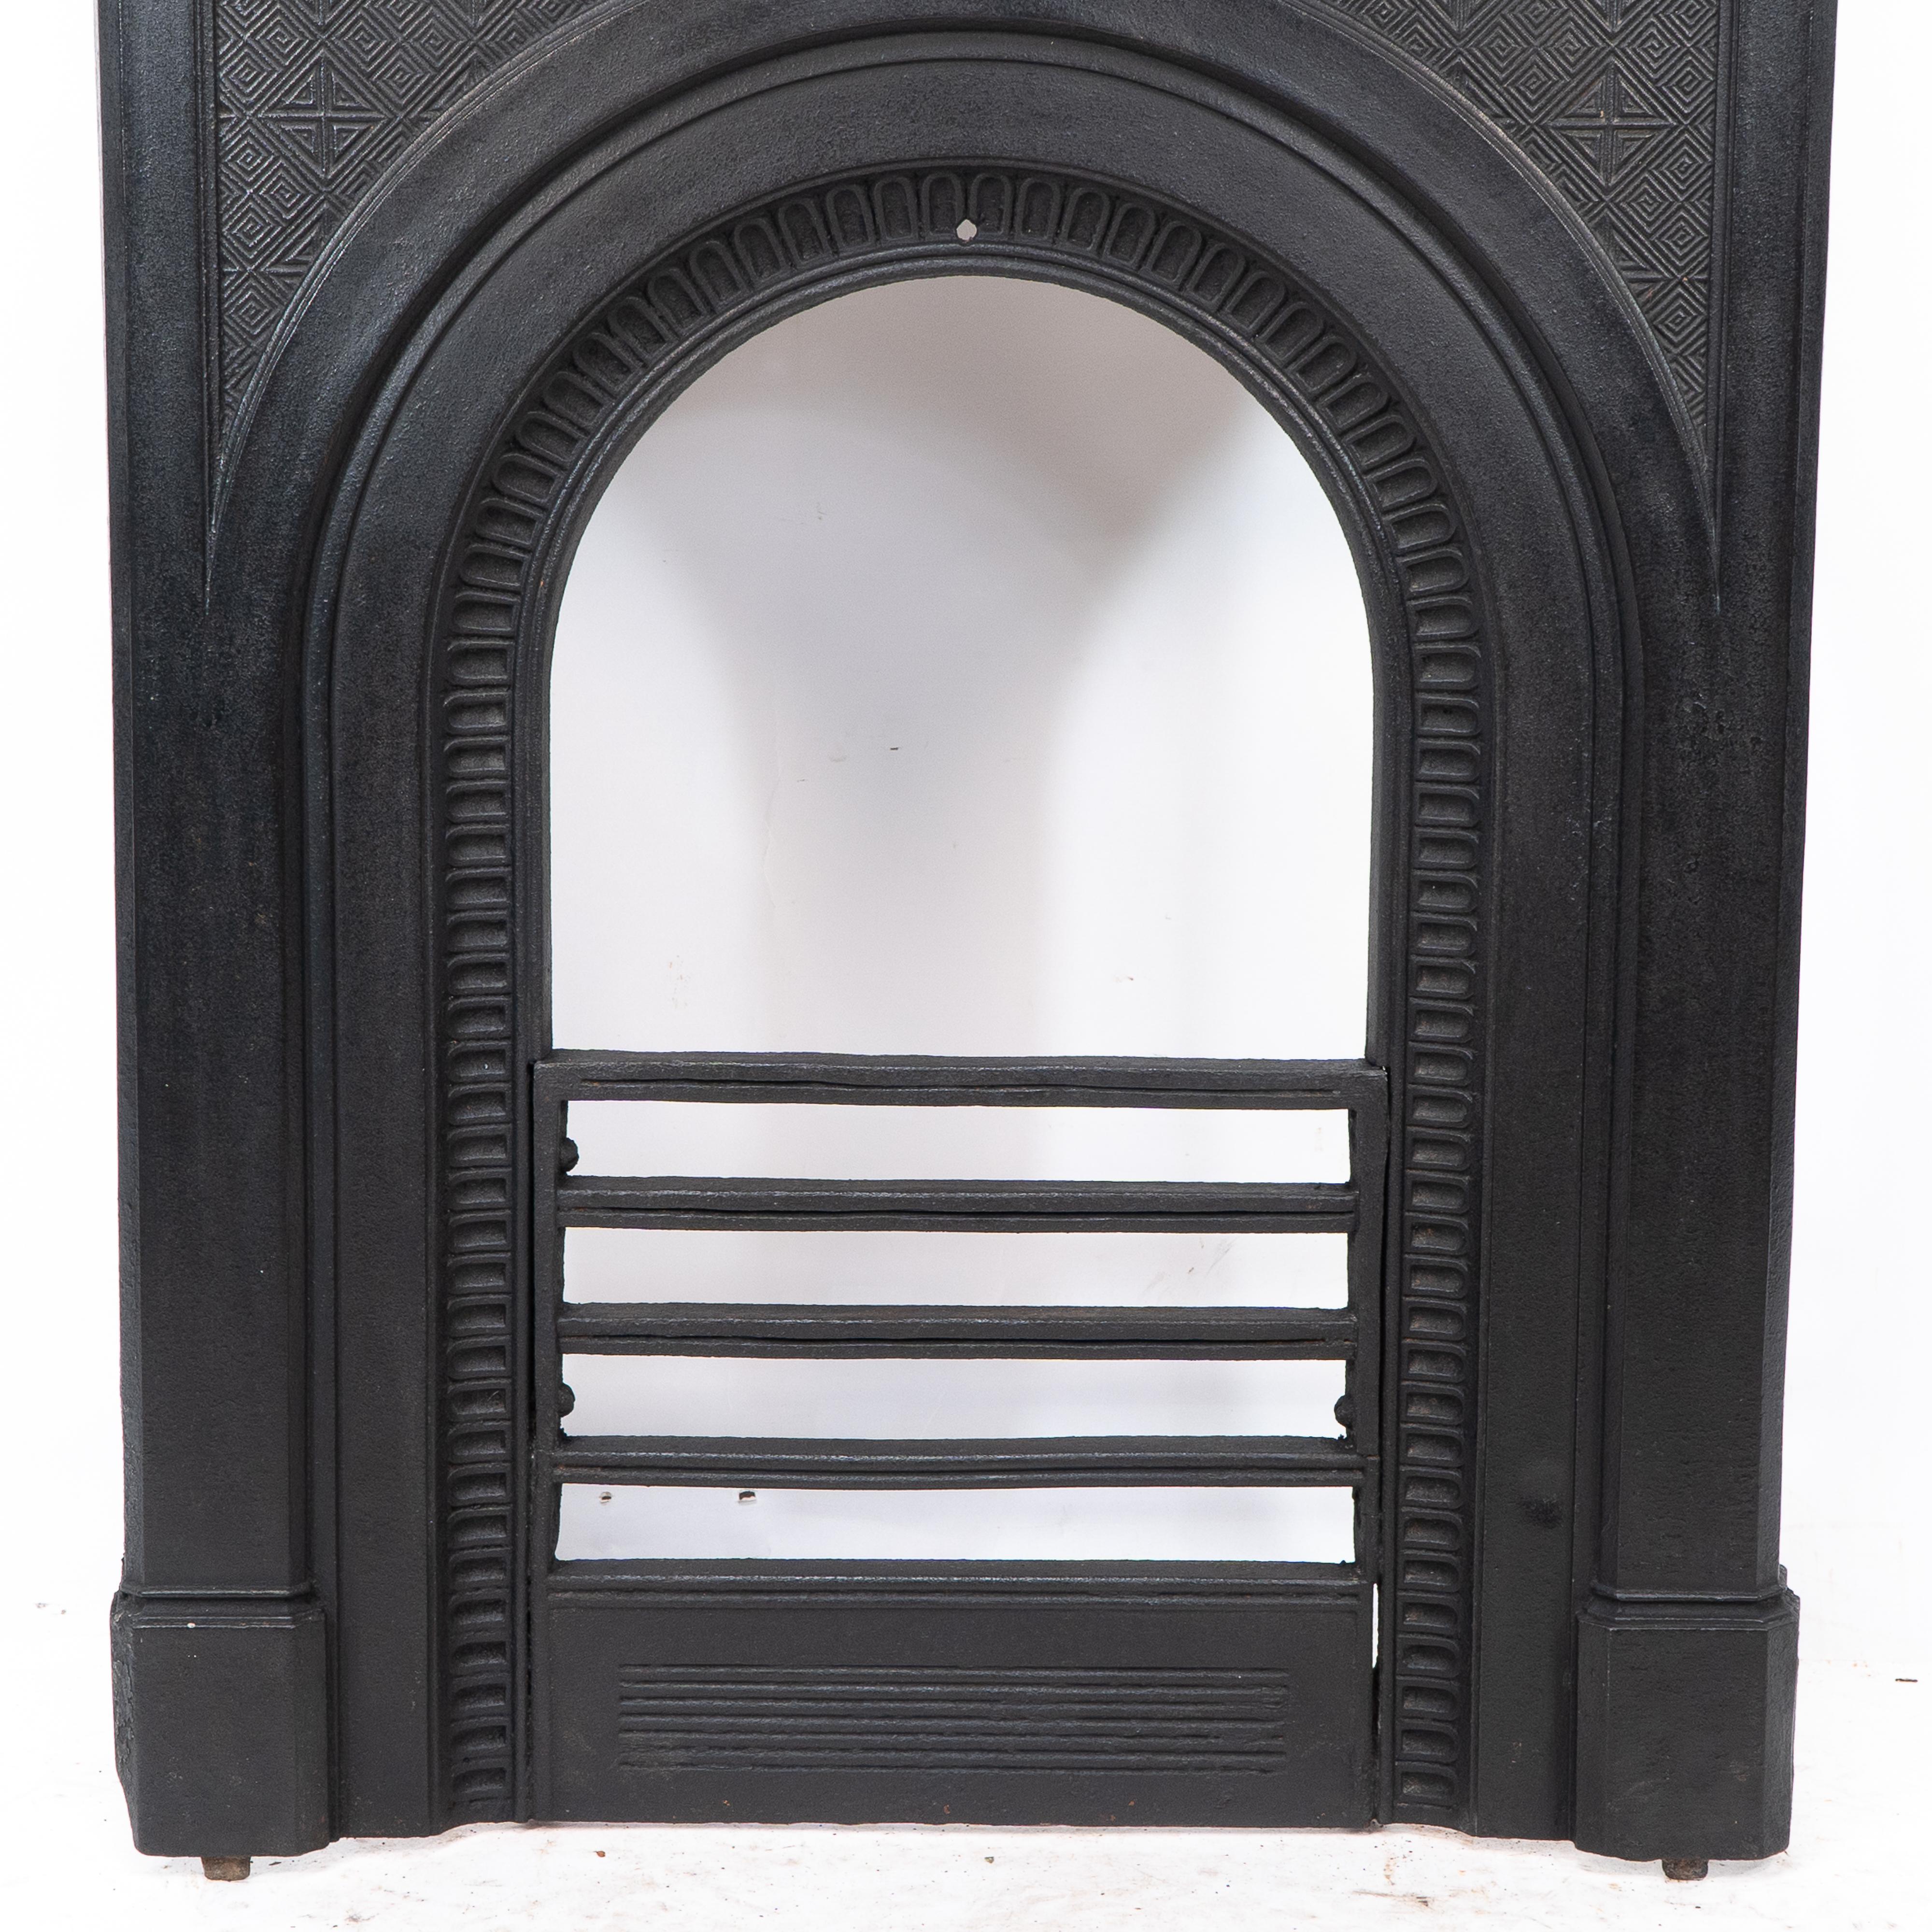 Thomas Jeckyll for Barnard Bishop & Barnard. A rare Aesthetic Movement fireplace For Sale 2